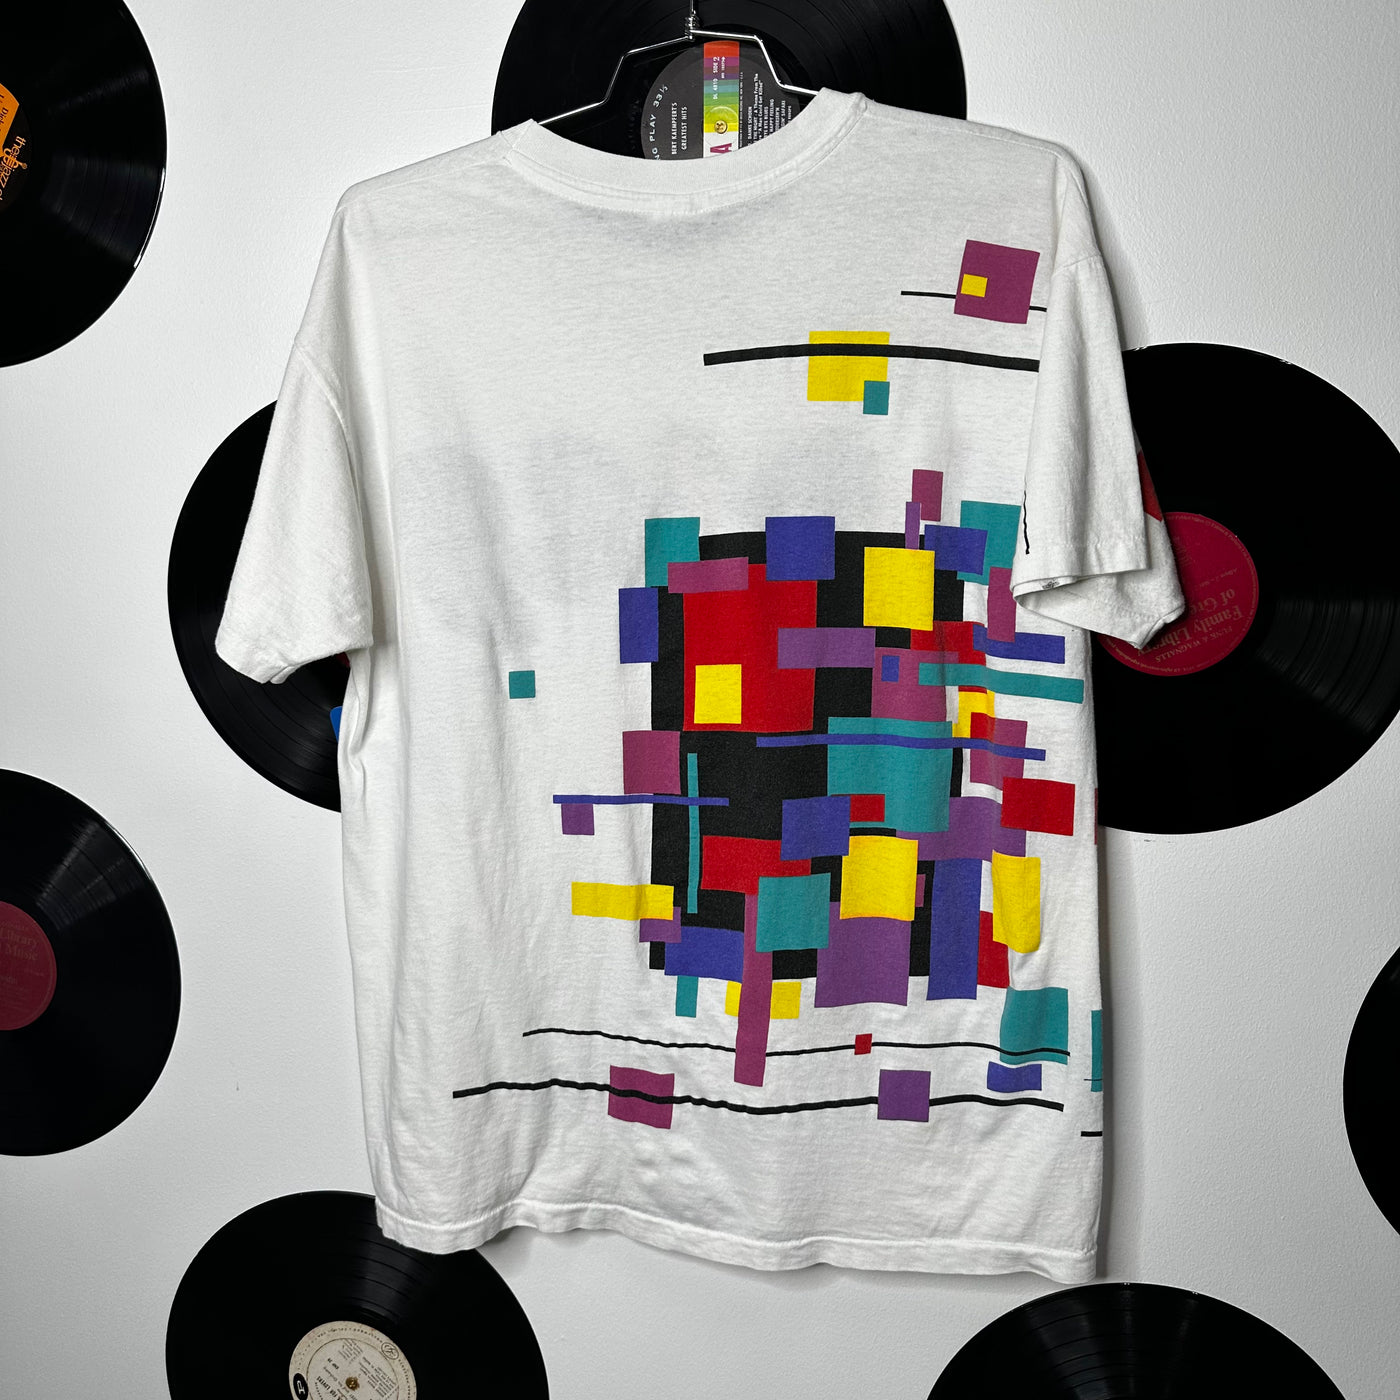 '94 Peter Max Yes Tour Shirt All Over Print T-shirt sz XL